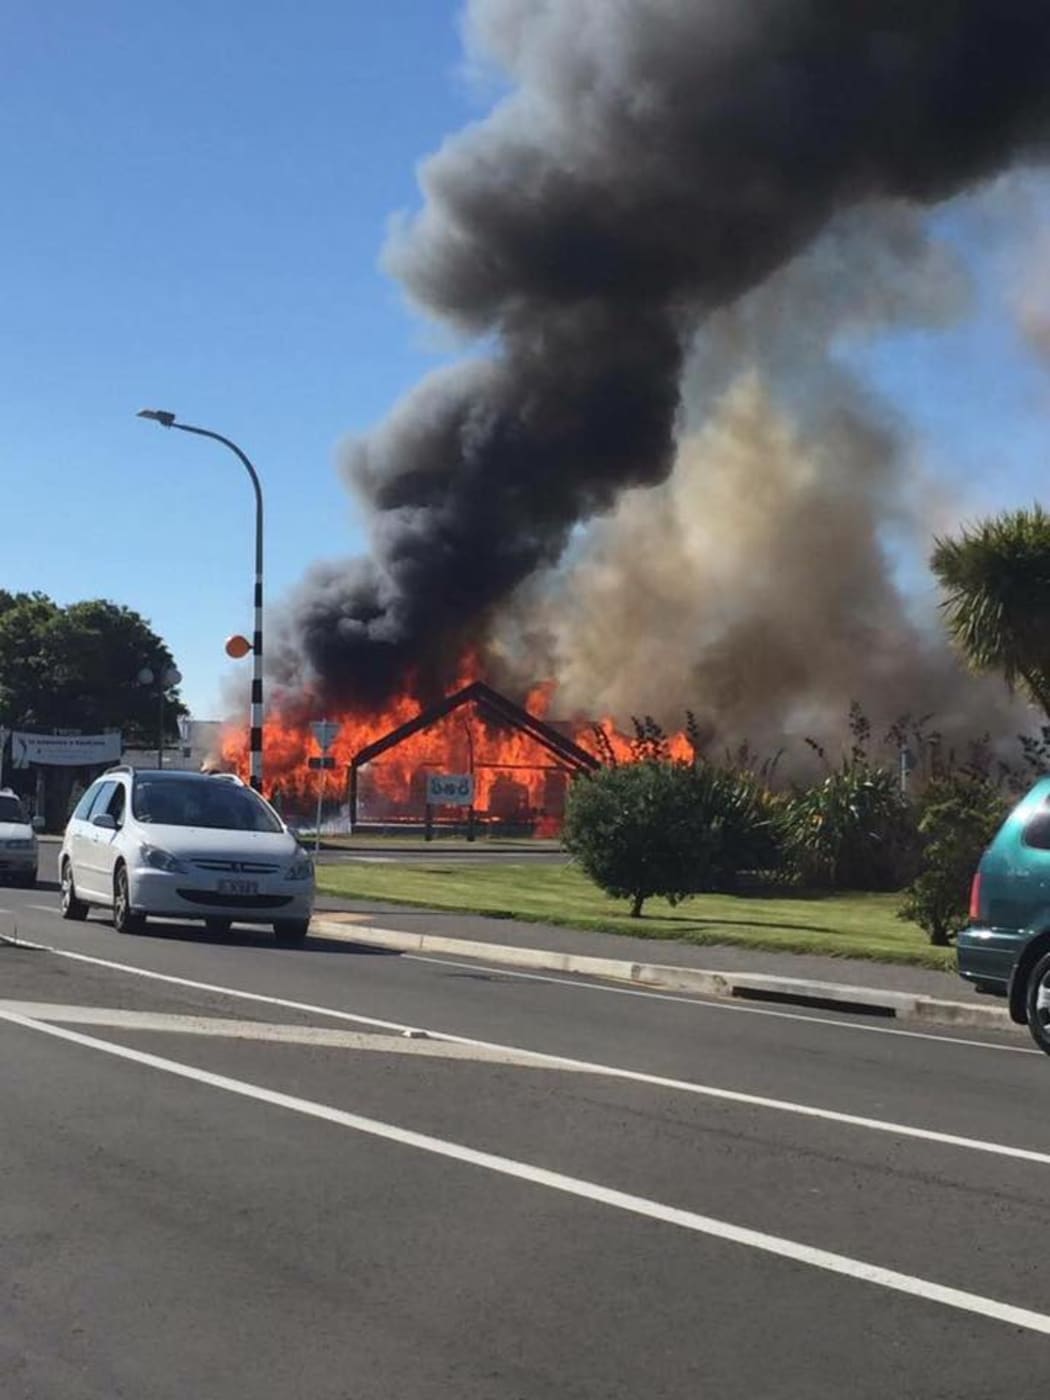 Photos posted on social media show the fire at Te Wānanga o Raukawa in Otaki on 25 January 2016.